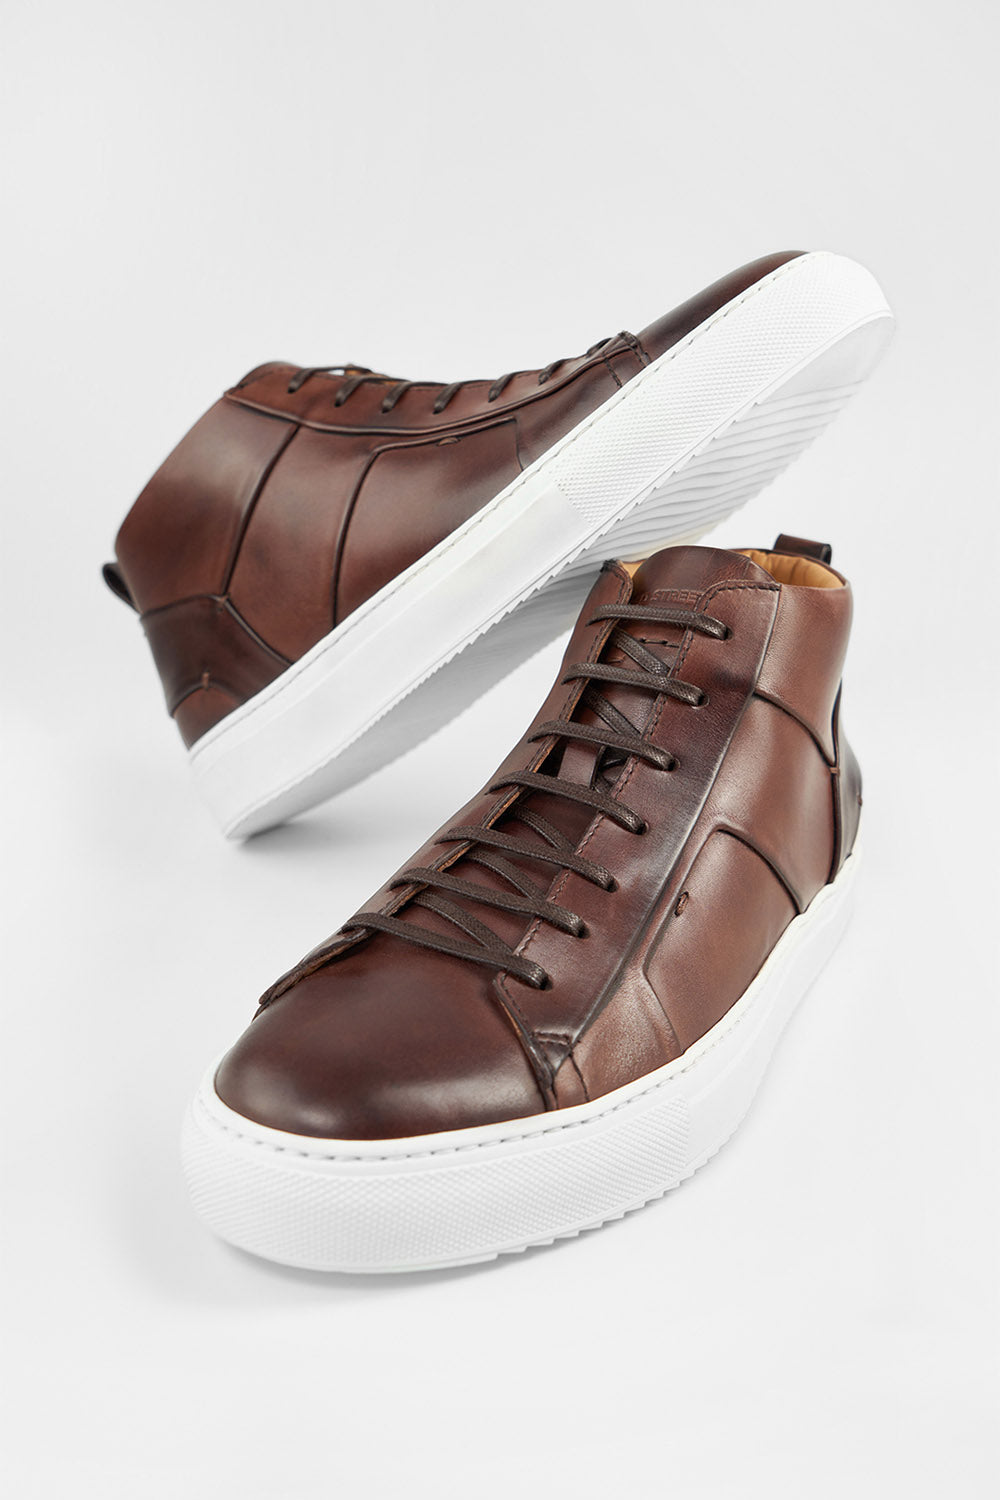 SKYE noble-brown folded mid patina sneakers